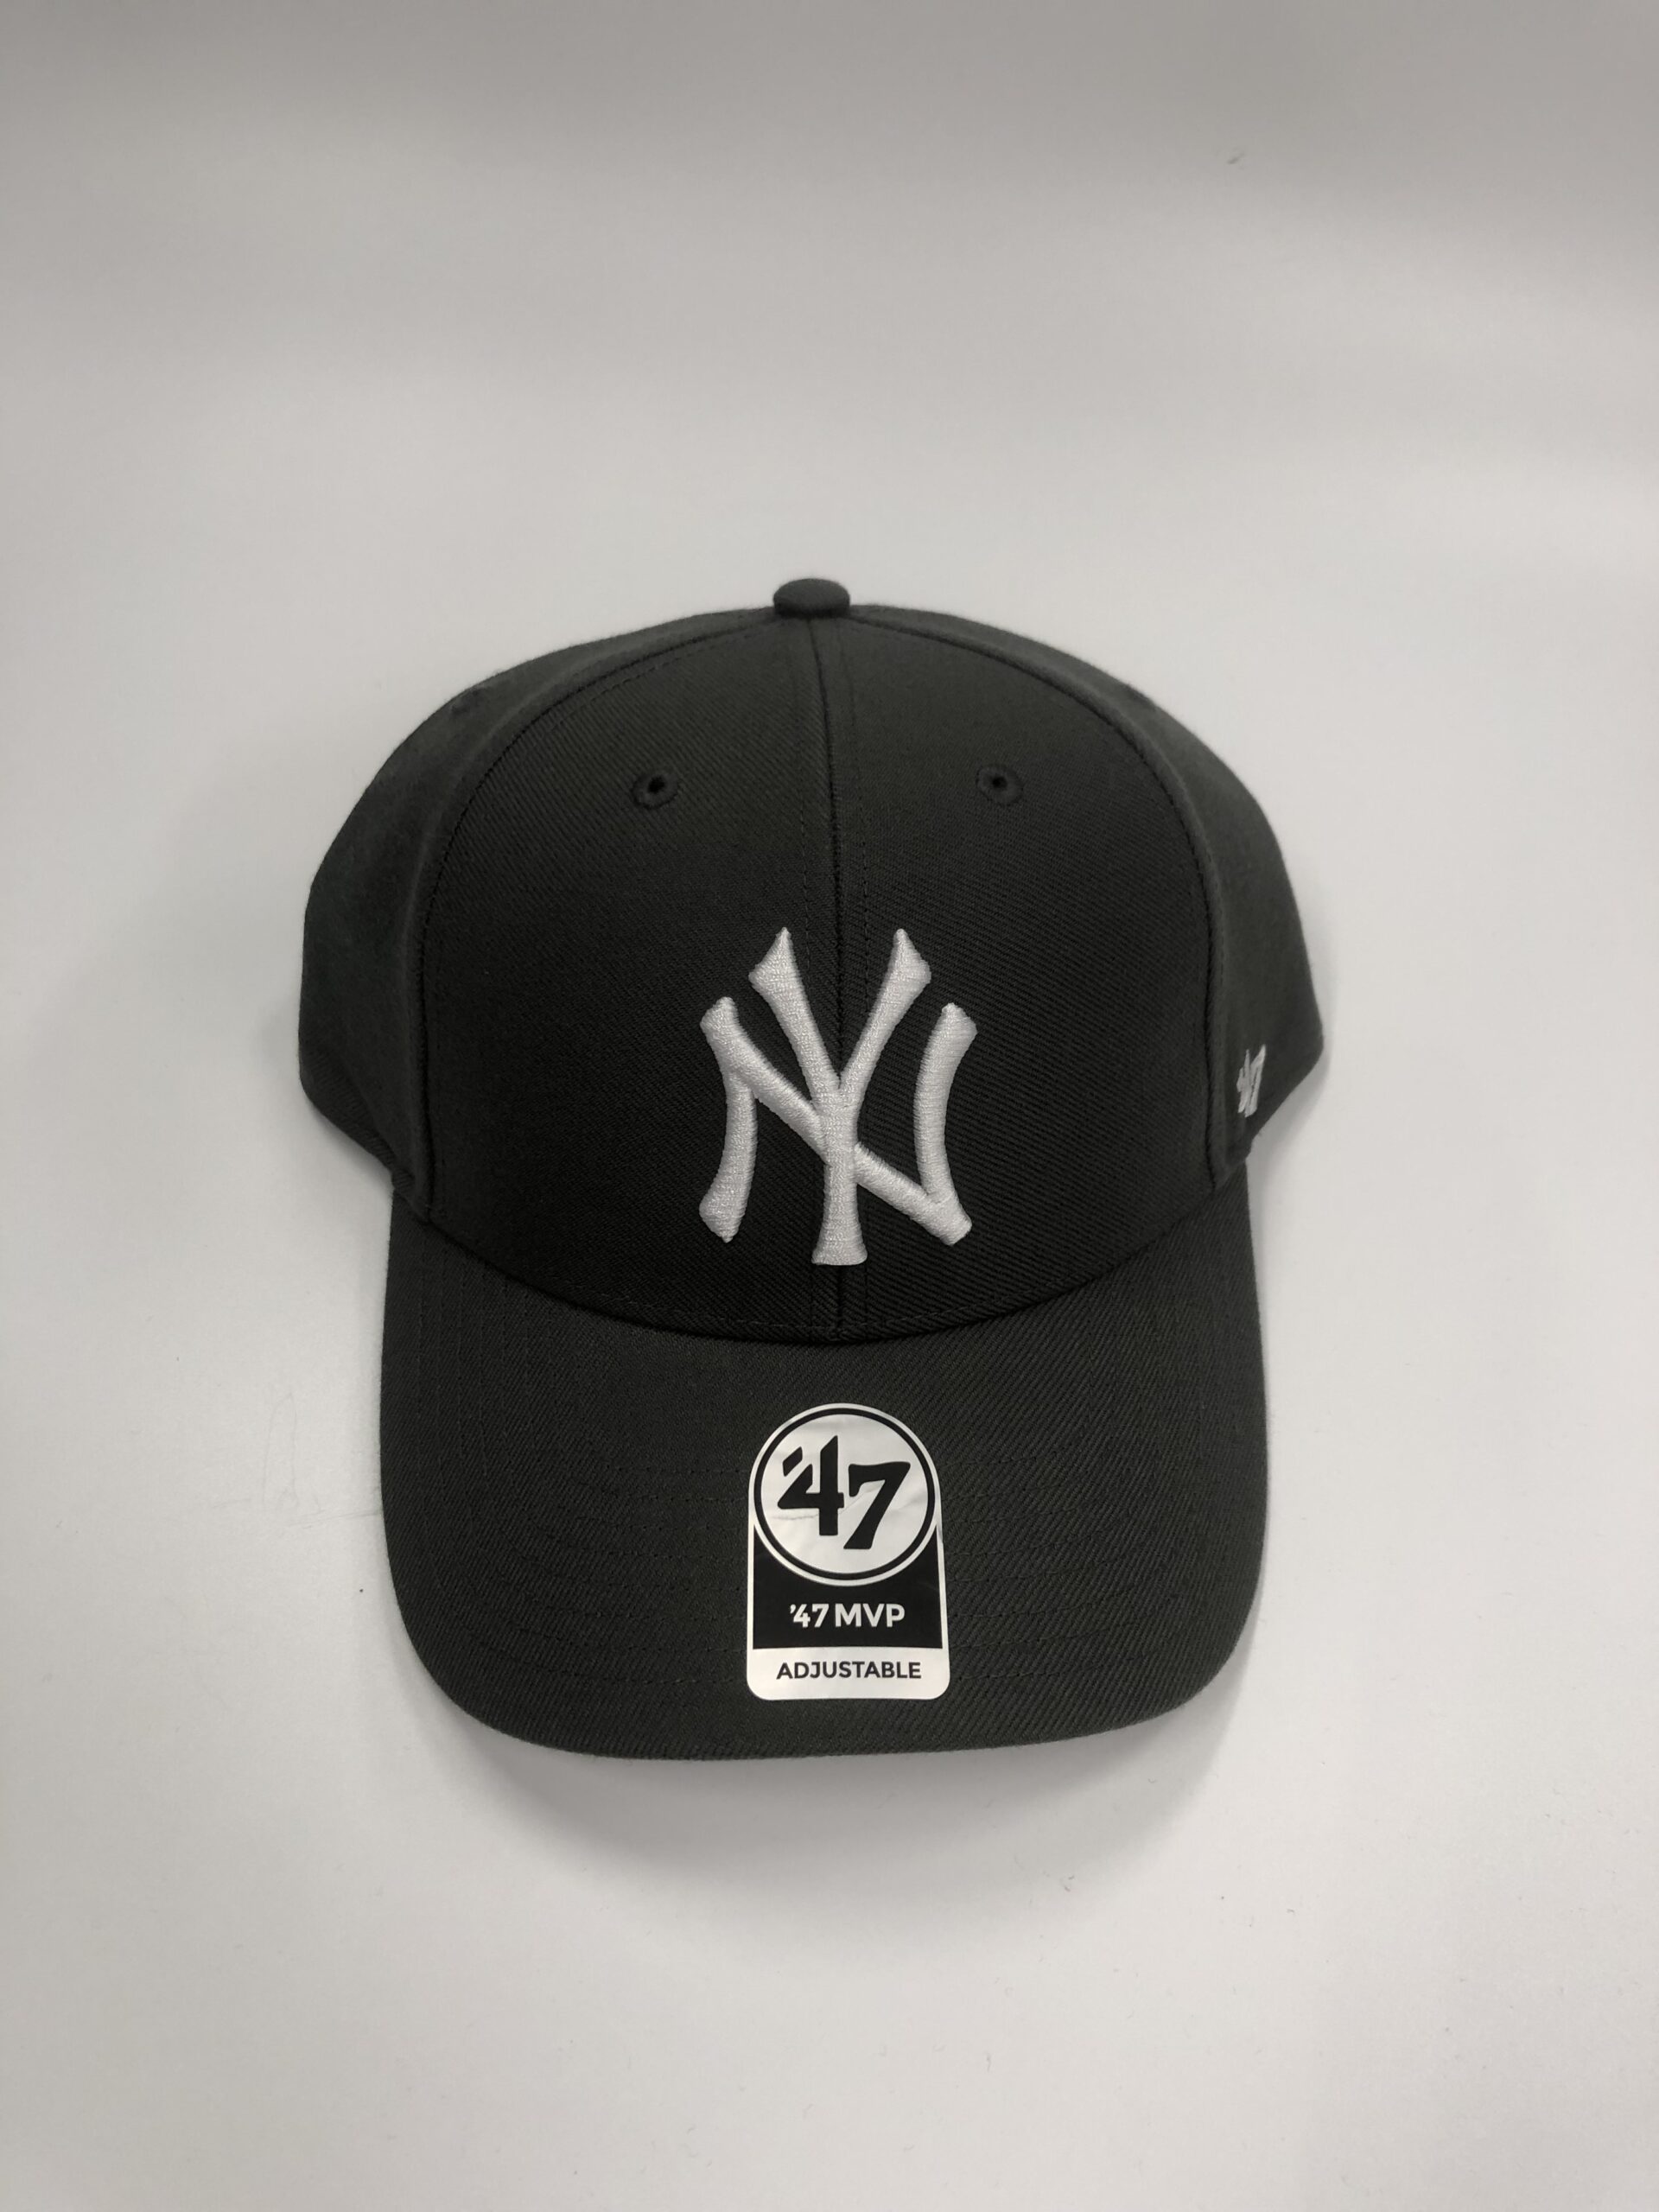 Yankees’47 MVP Charcoal